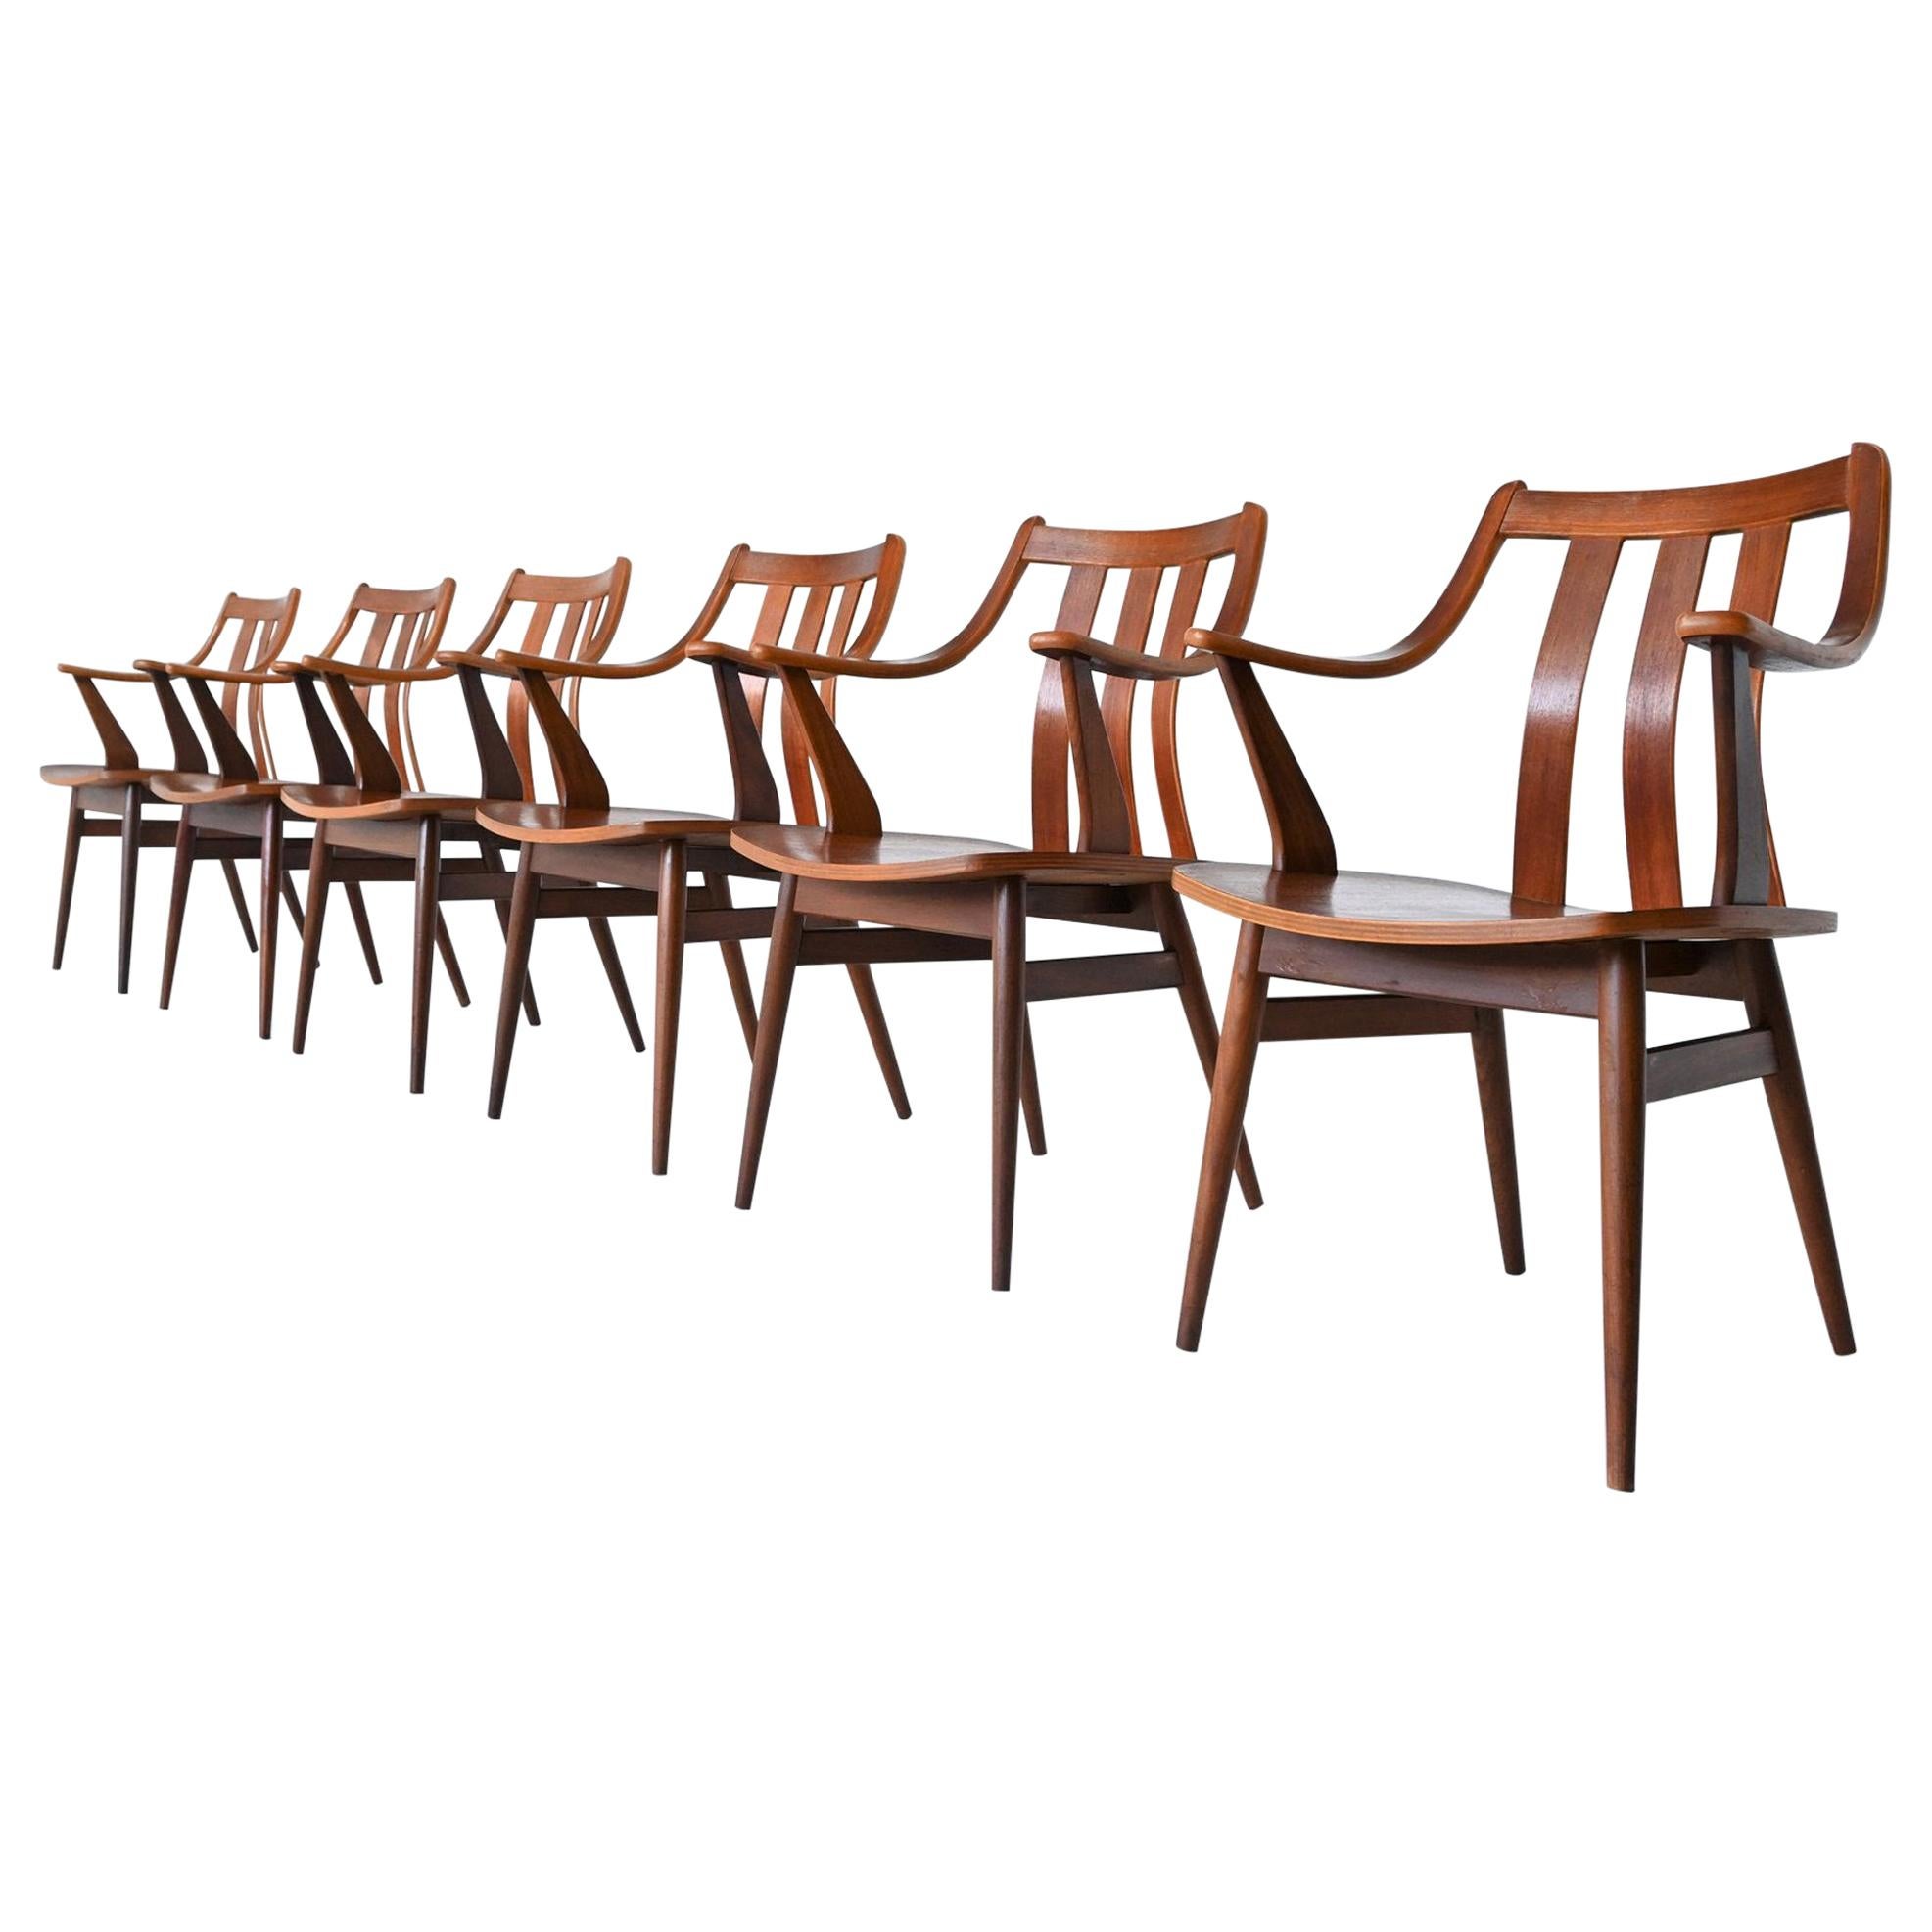 Dutch Teak Plywood Chairs Hans Brattrud Style, 1960